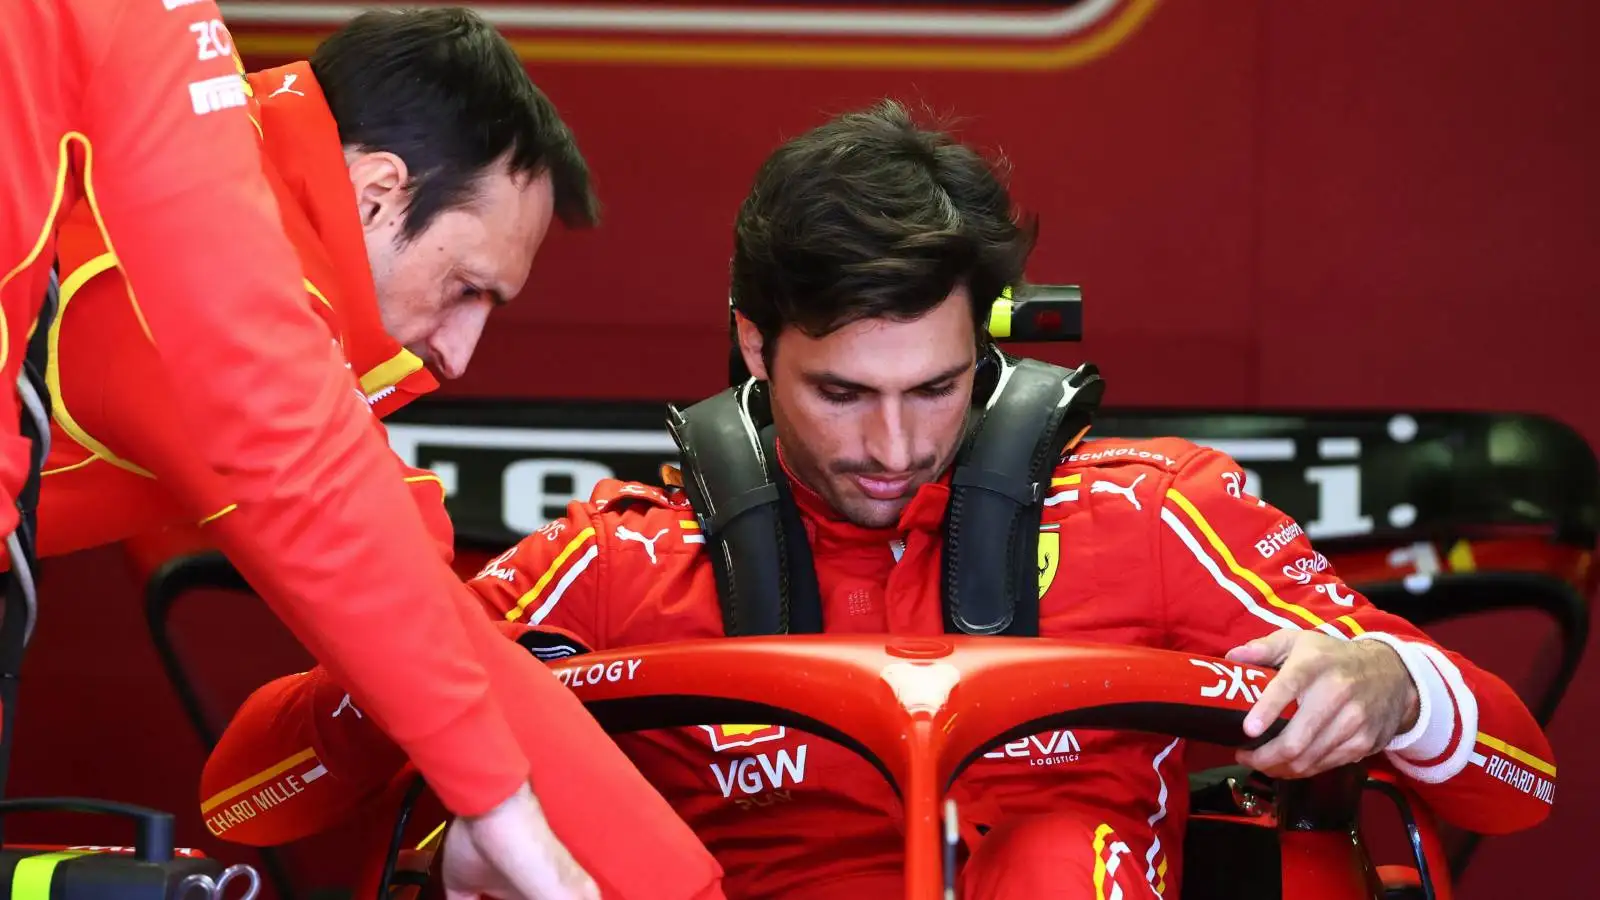 Ferrari’s Carlos Sainz responds after Australian GP fitness concerns raised